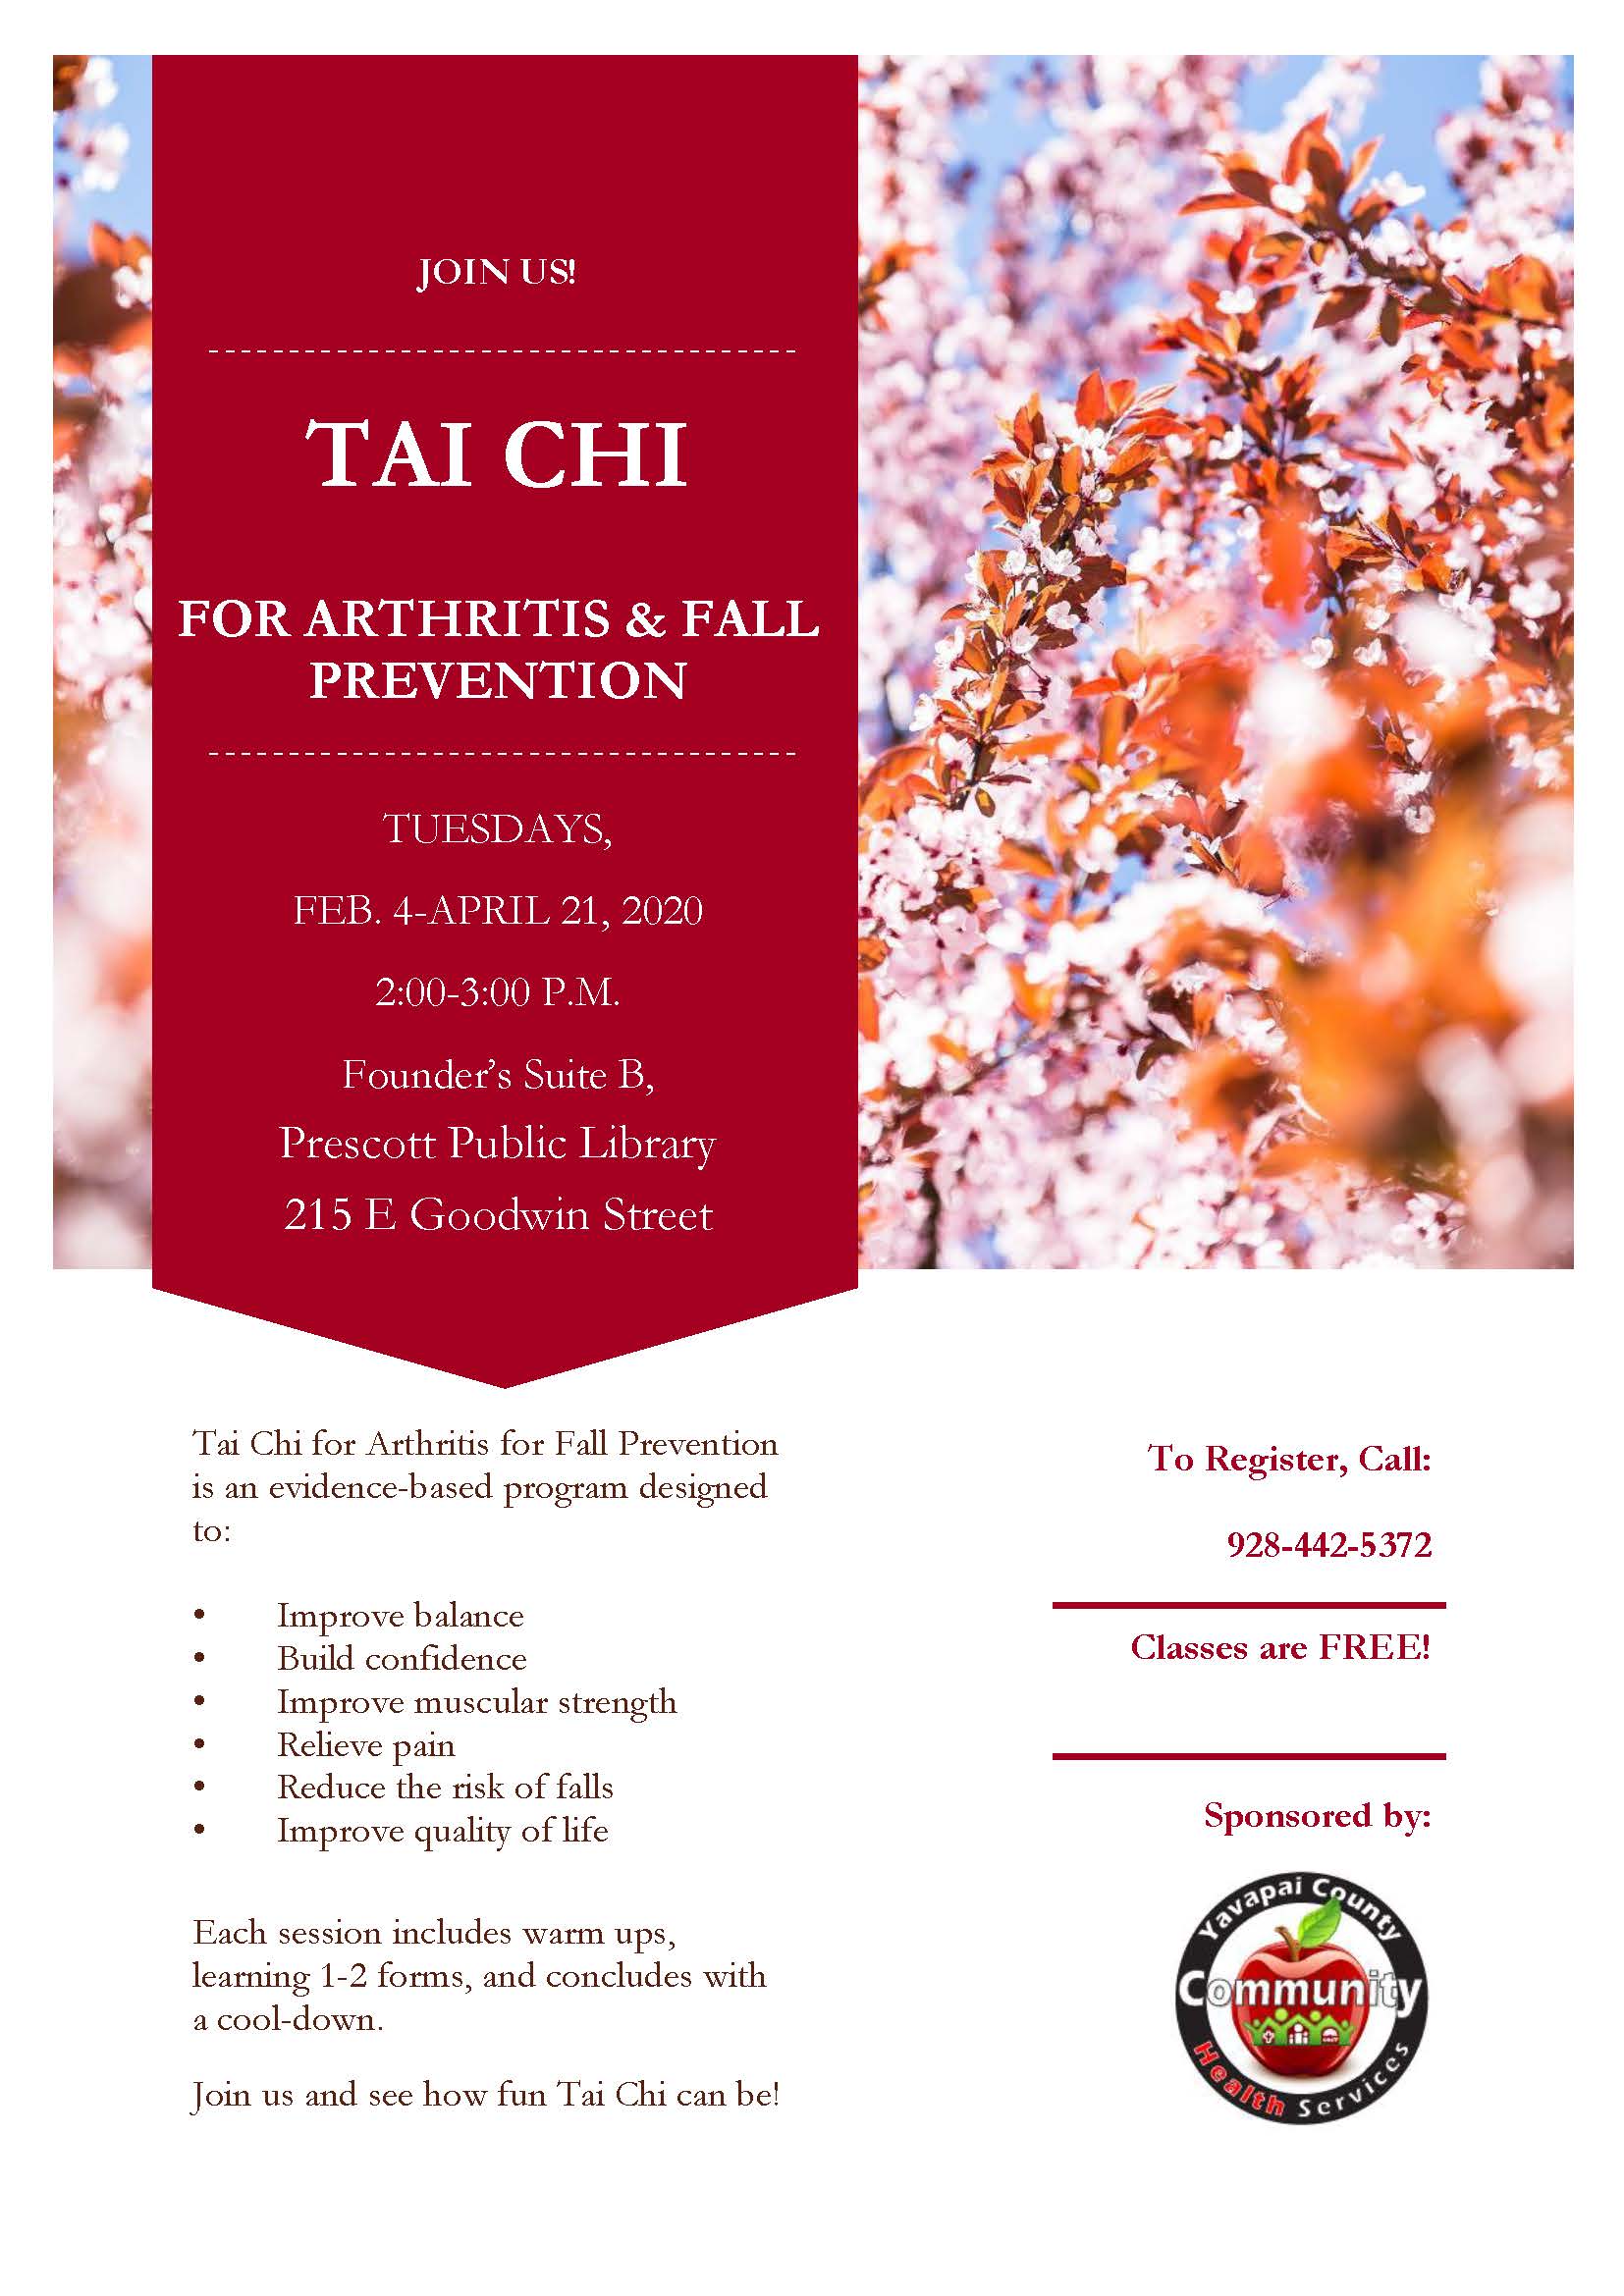 Tai Chi for Arthritis & Fall Prevention flyer